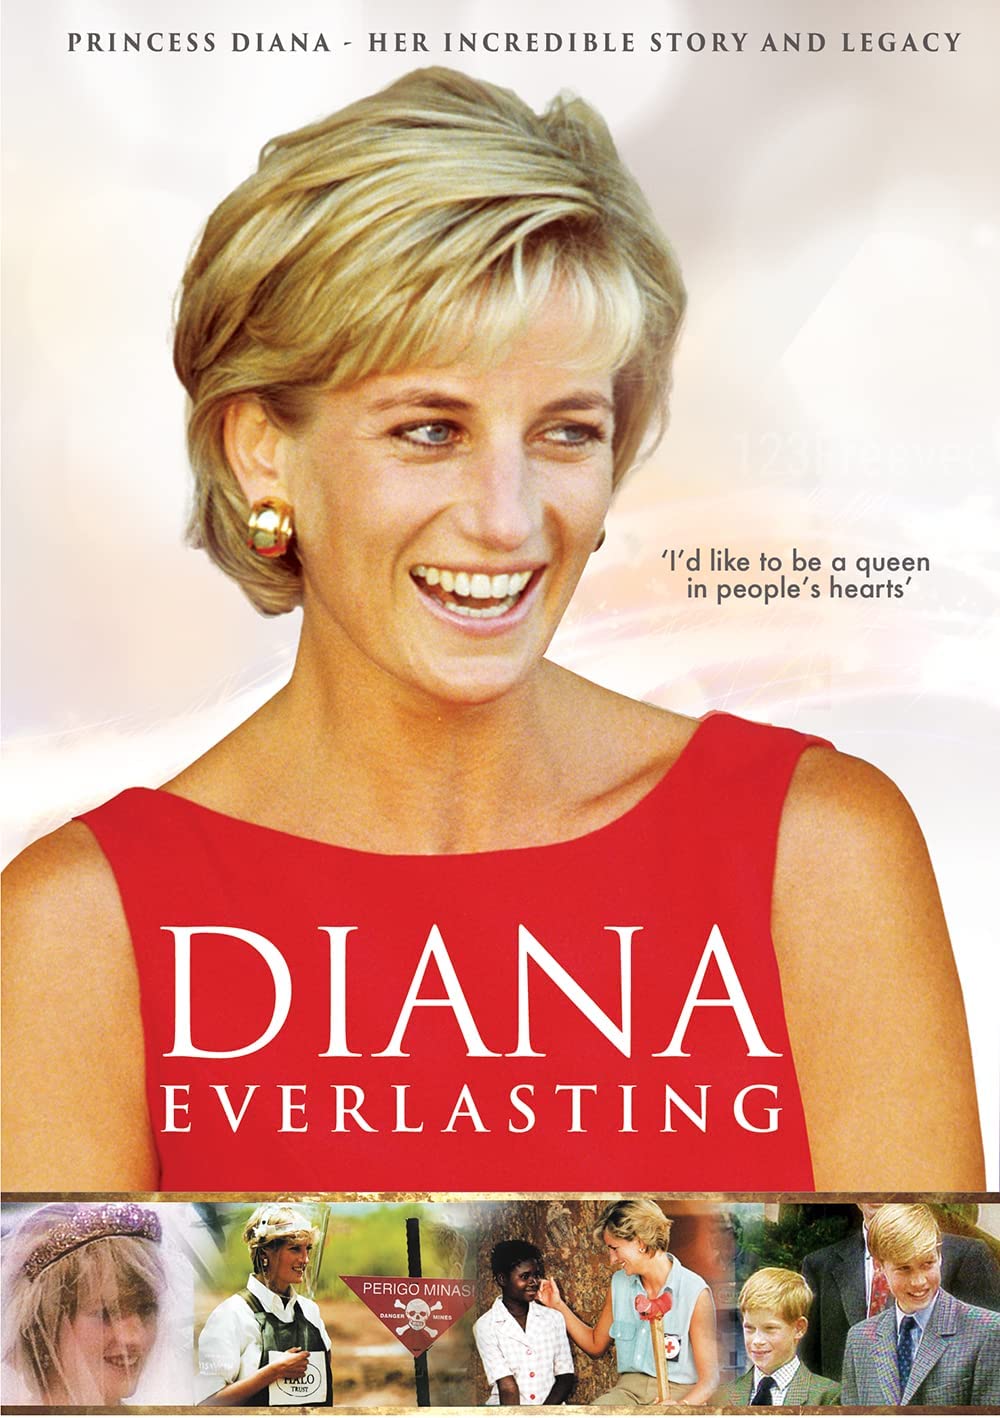 Diana: Everlasting (Princess Diana - Her Story and Legacy) [2021] [DVD]